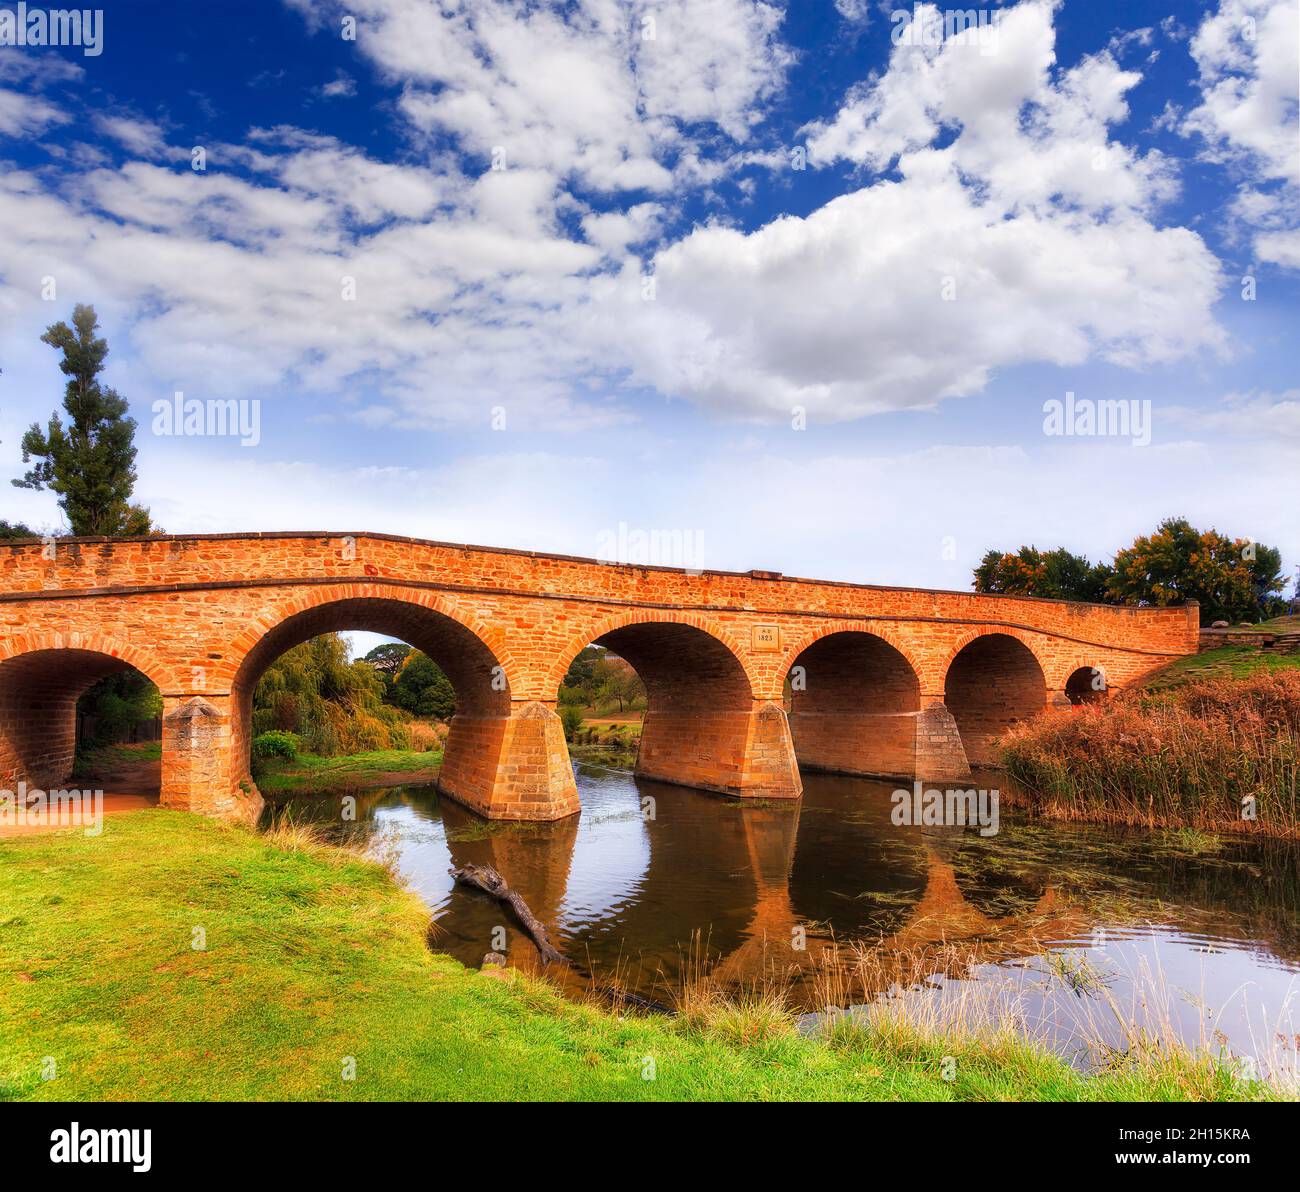 Old historic stone made masonry bridge in RIchmond town of Australia across the river. Stock Photo